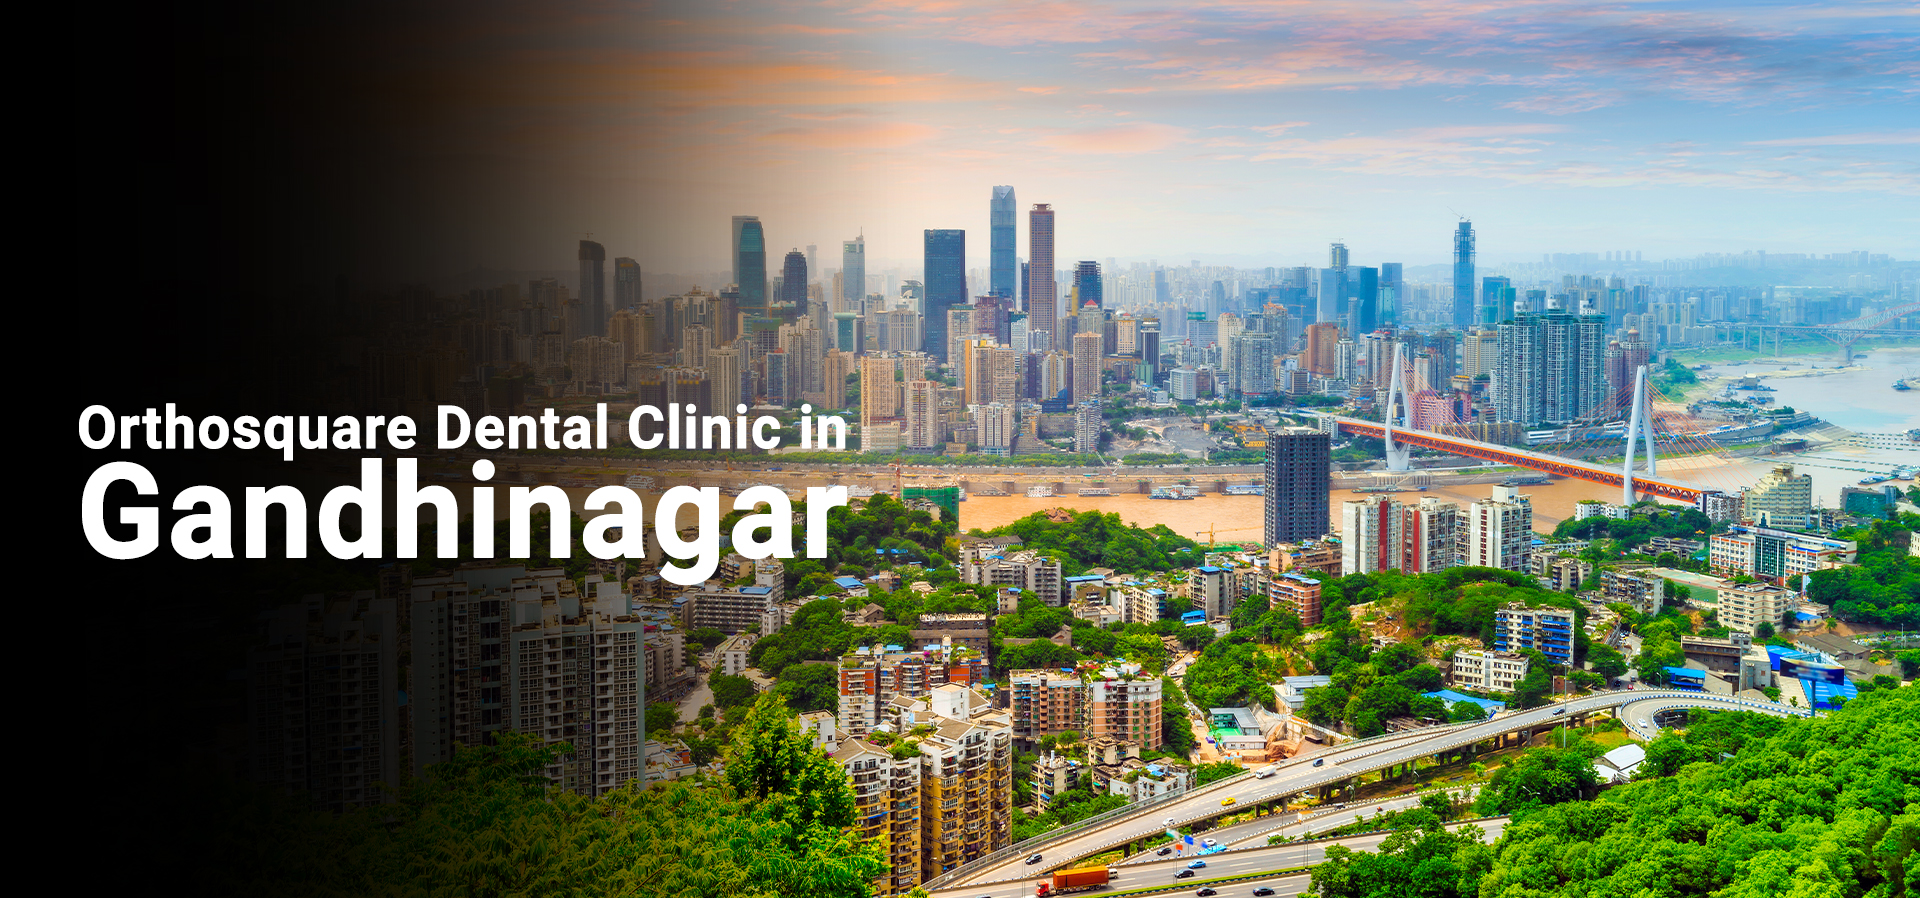 Gandhinagar orthosquare dental clinic